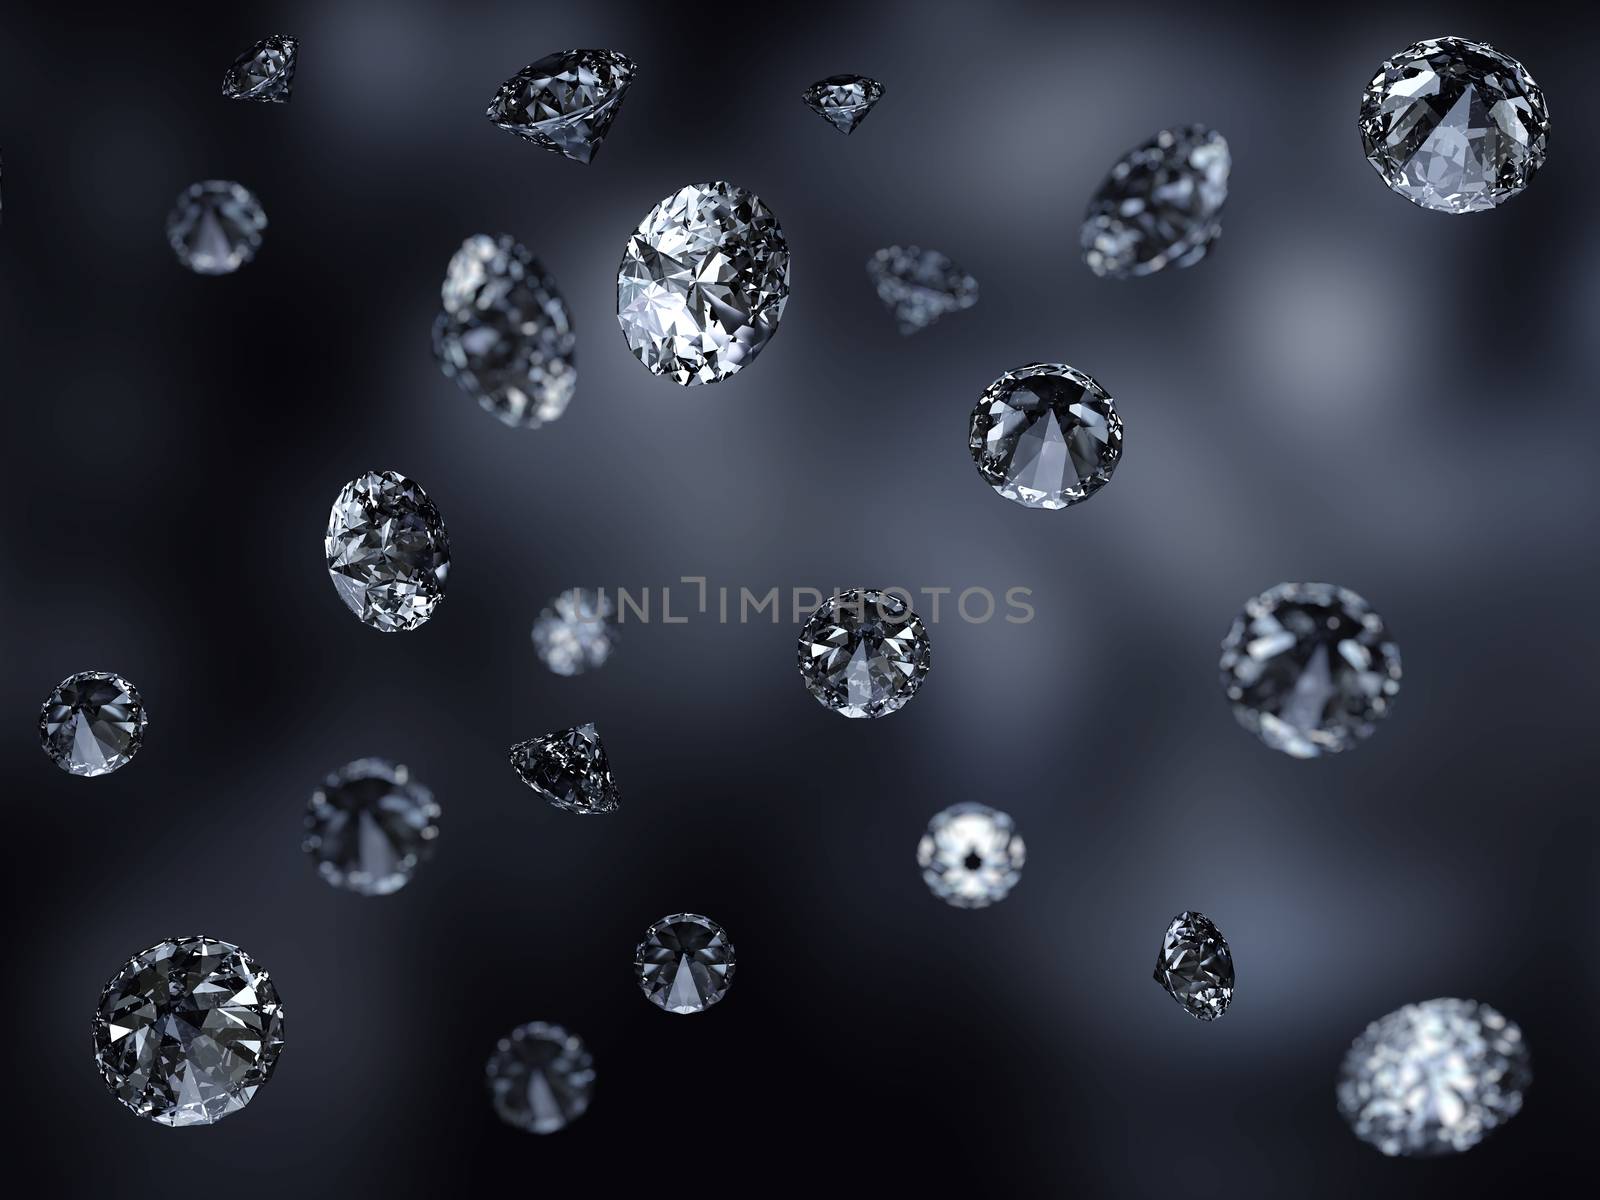 Falling diamonds background by 123dartist